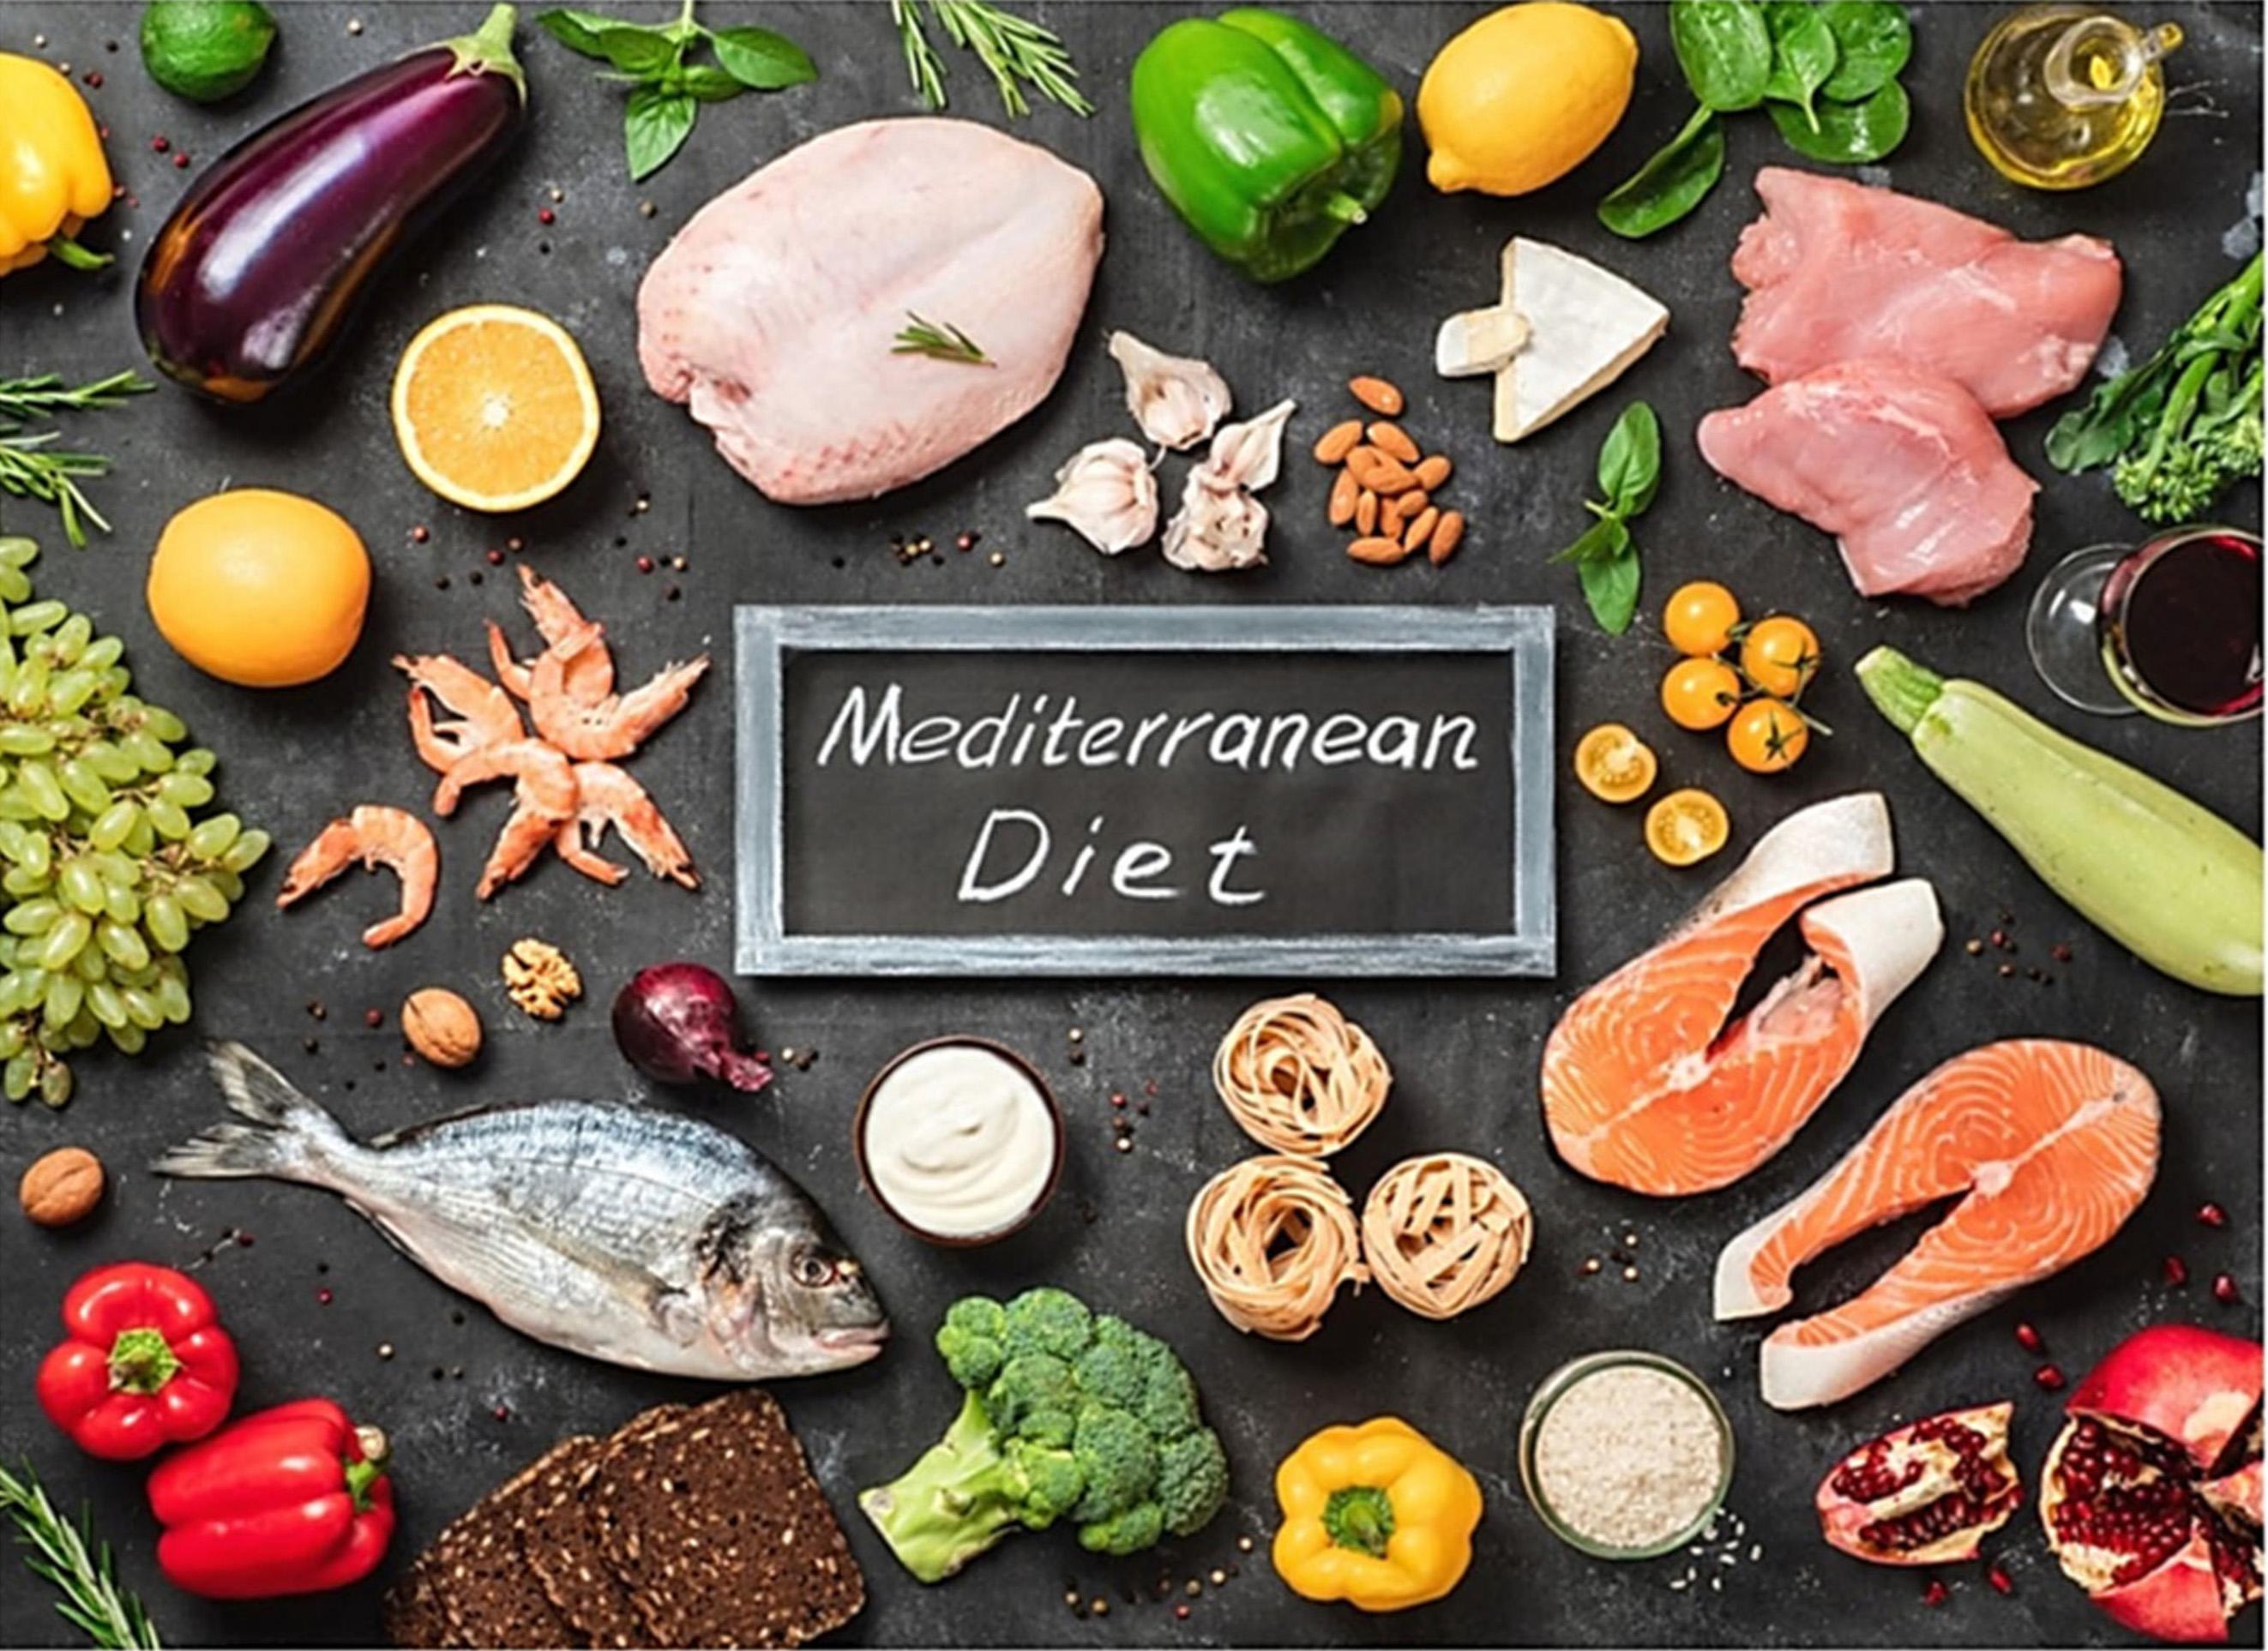 Image of the Mediterranean Diet food groups